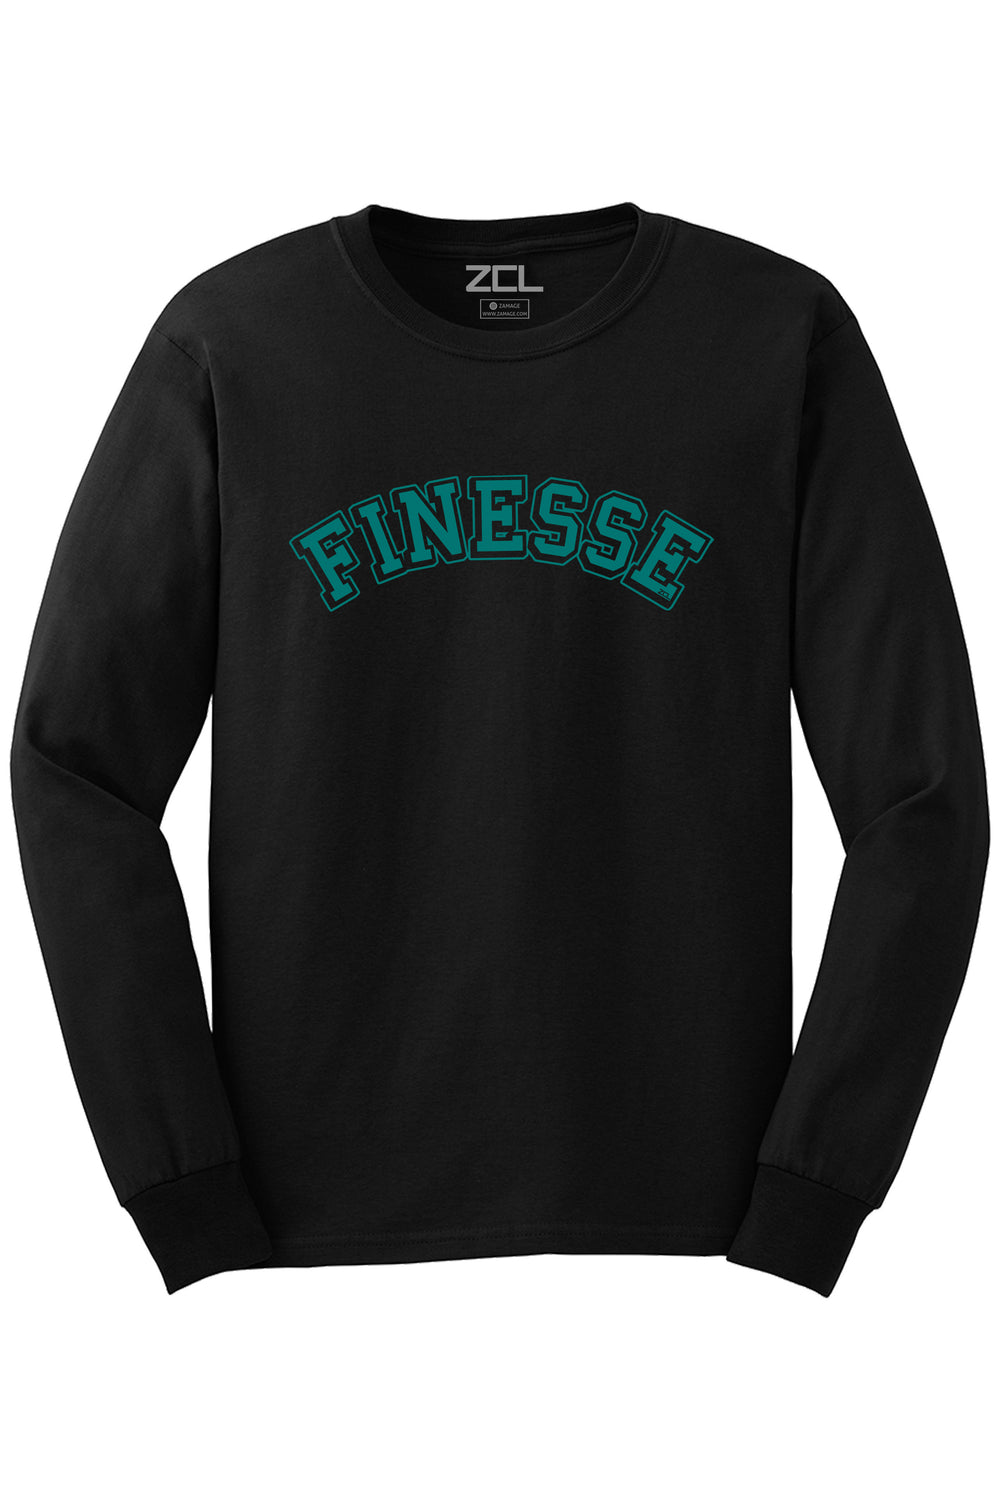 Finesse Long Sleeve Tee (Teal Logo) - Zamage